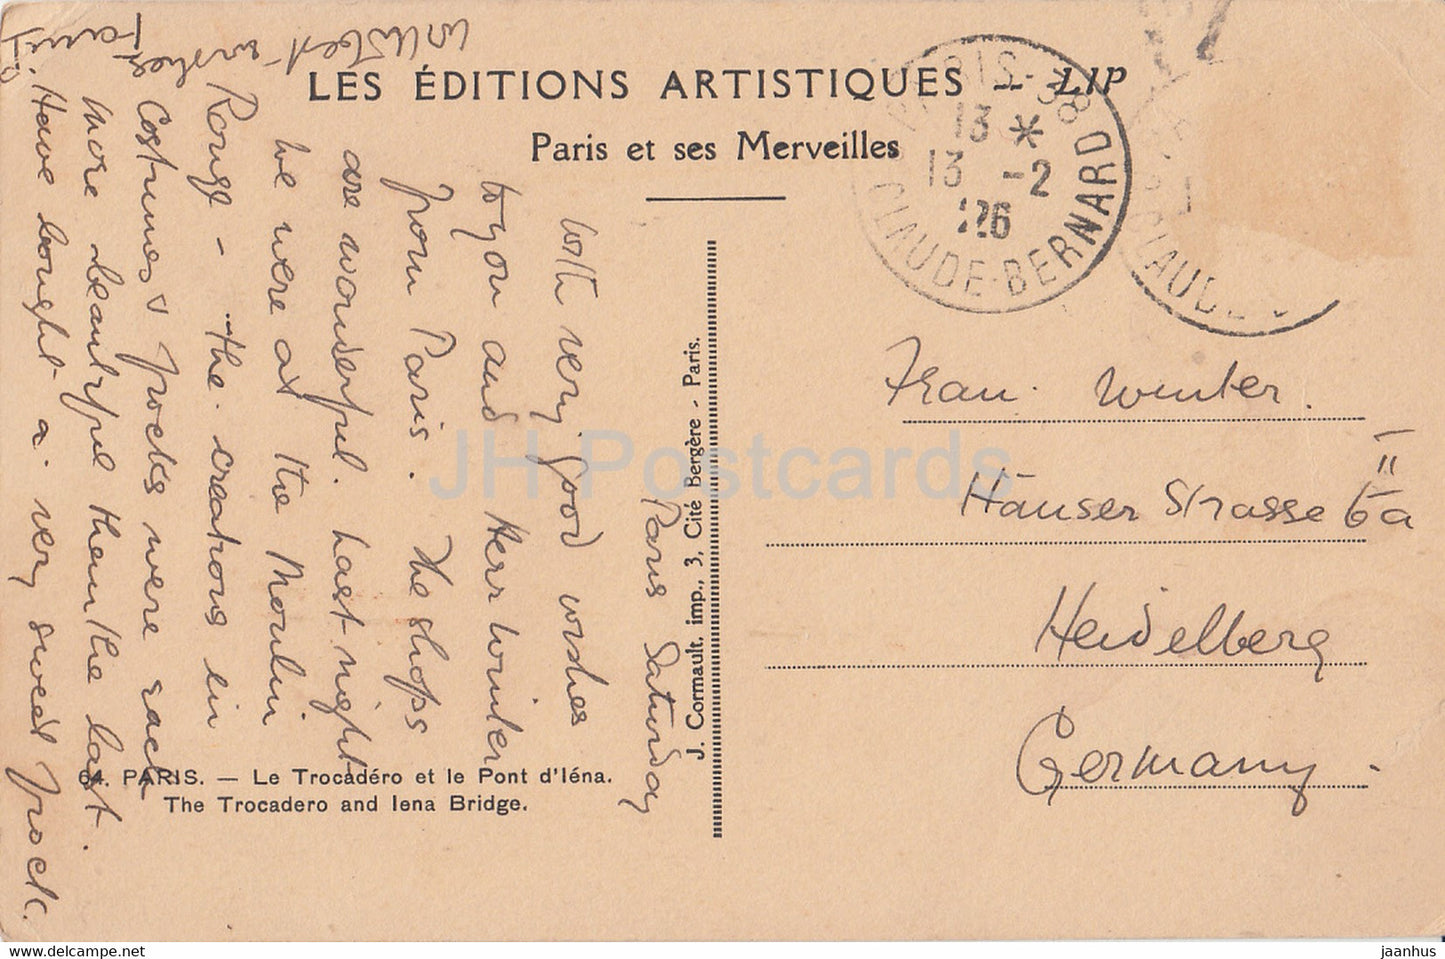 Paris - Le Trocadero et le Pont d'Iena - The Trocadero and Iena bridge - car - 64 - old postcard - 1926 - France - used